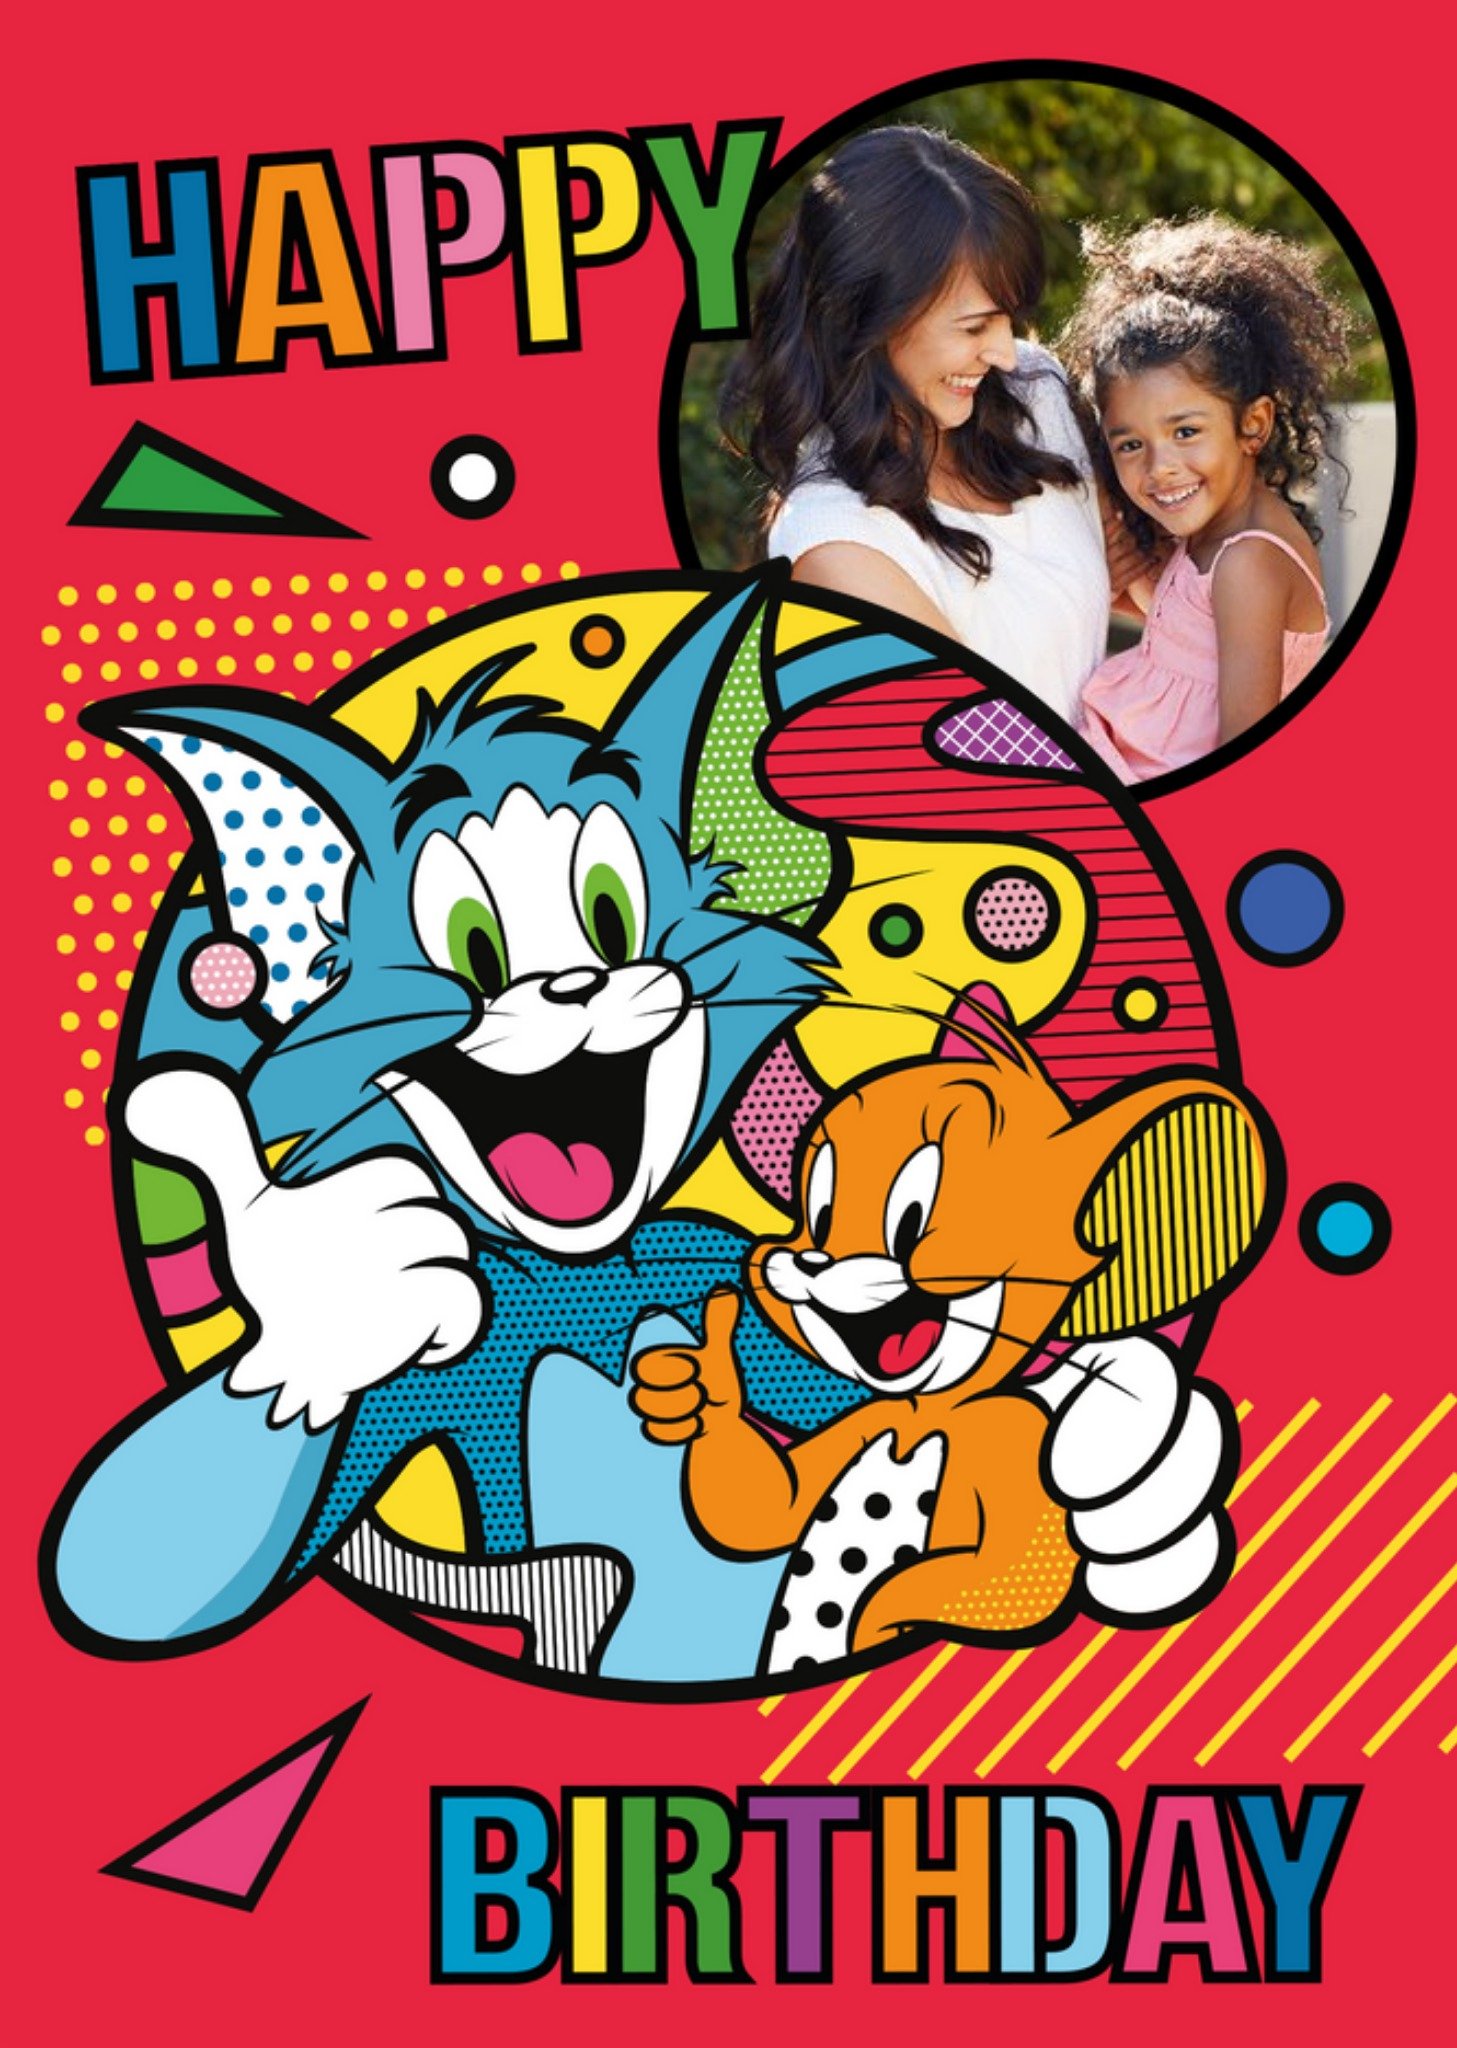 Moonpig Tom And Jerry Pop Art Style Photo Upload Birthday Card Ecard